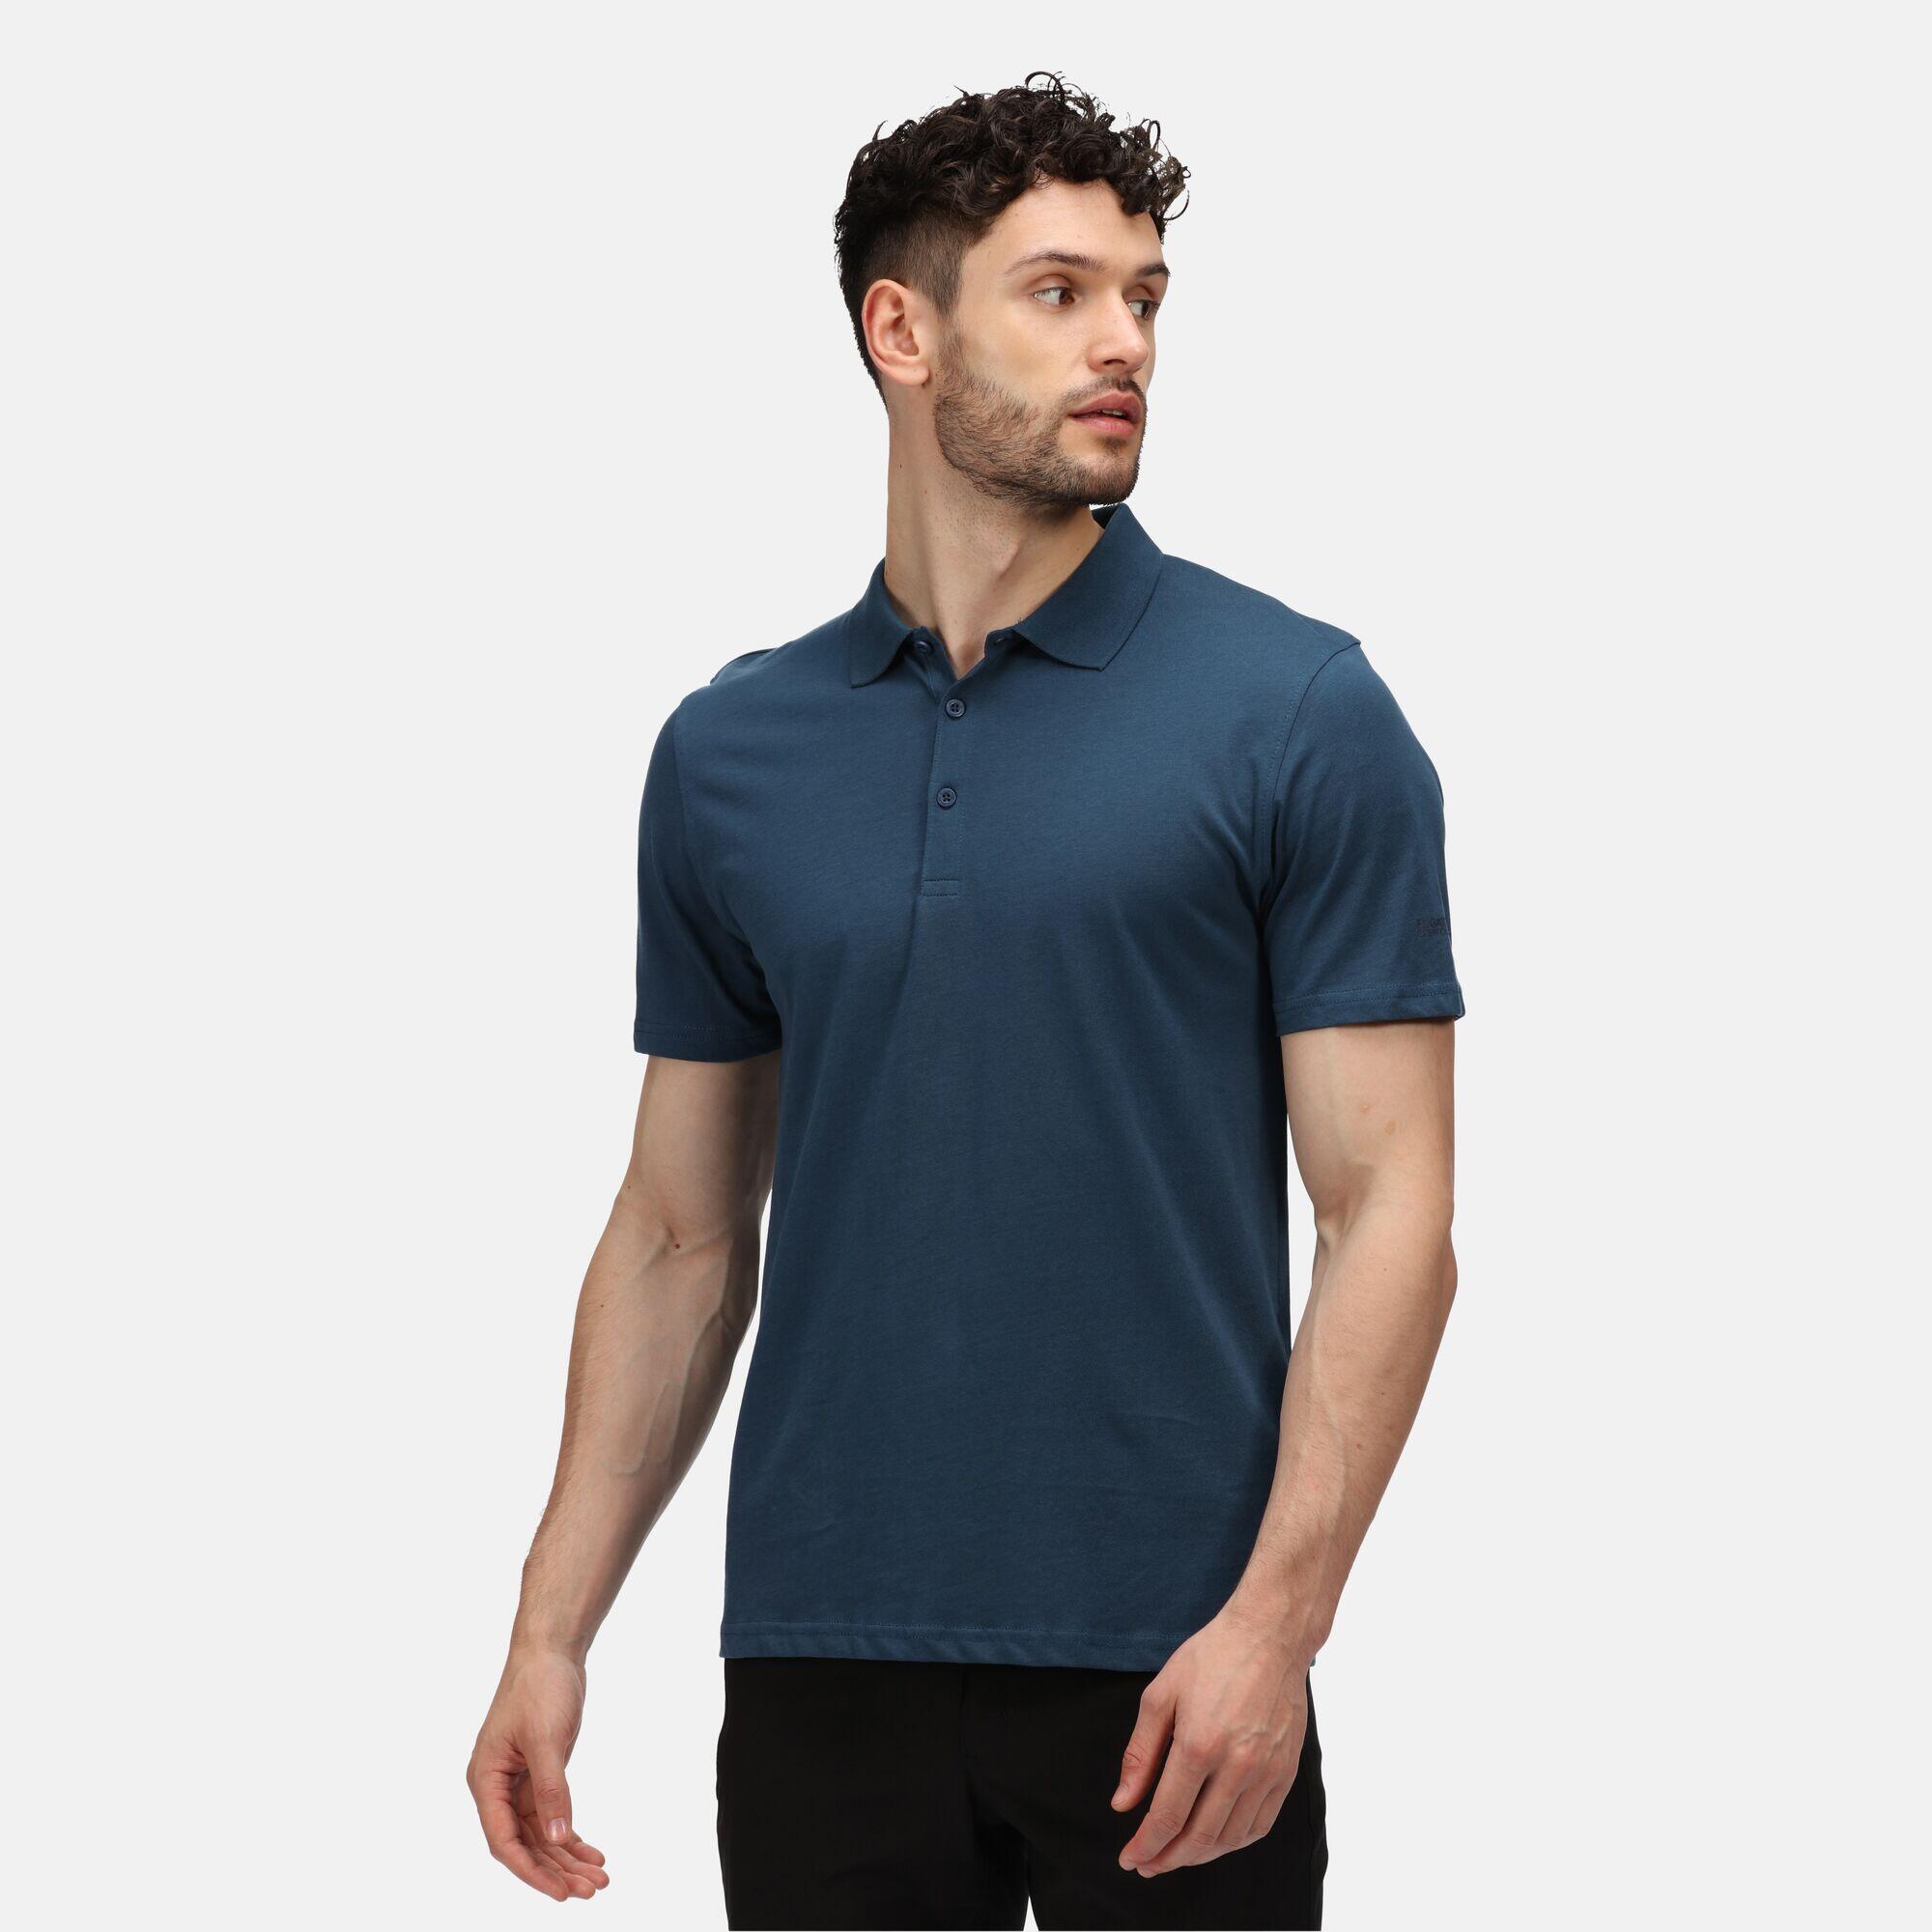 Sinton Men's Fitness Short Sleeve Polo Shirt - Moonlight Denim 1/5